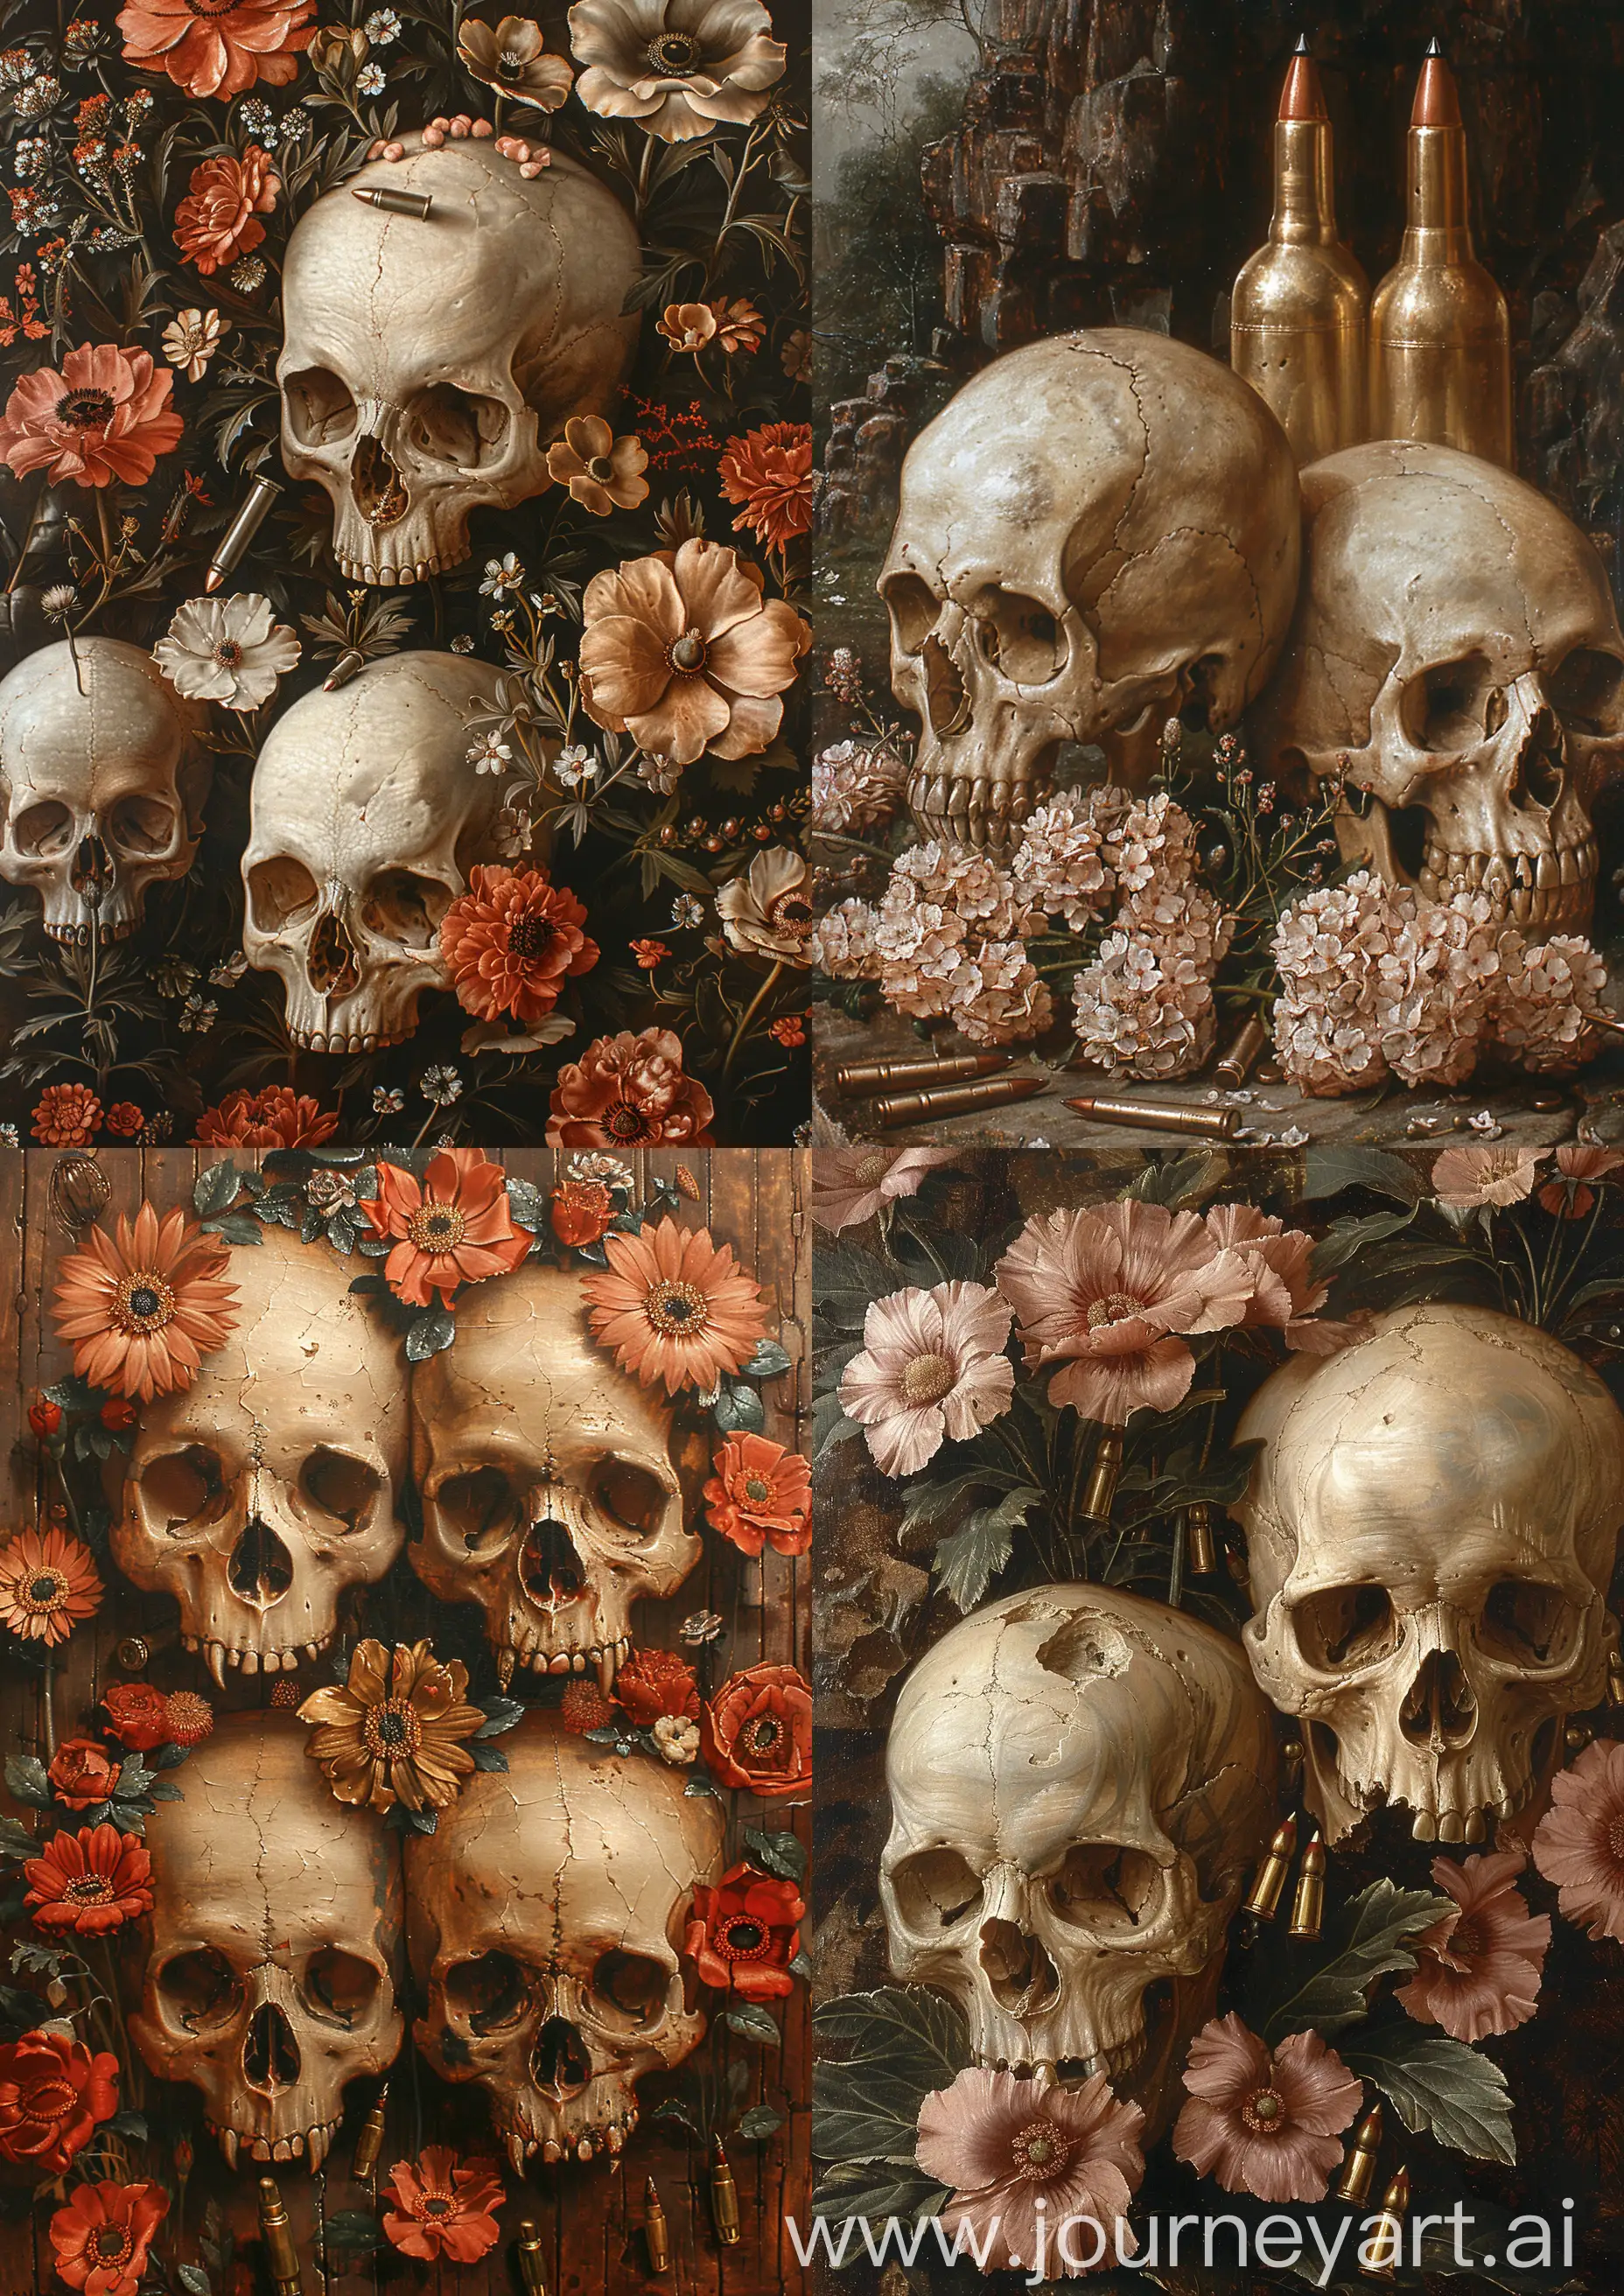 Edward-BurneJones-Skulls-Flowers-and-Bullets-Earth-Tones-Painting